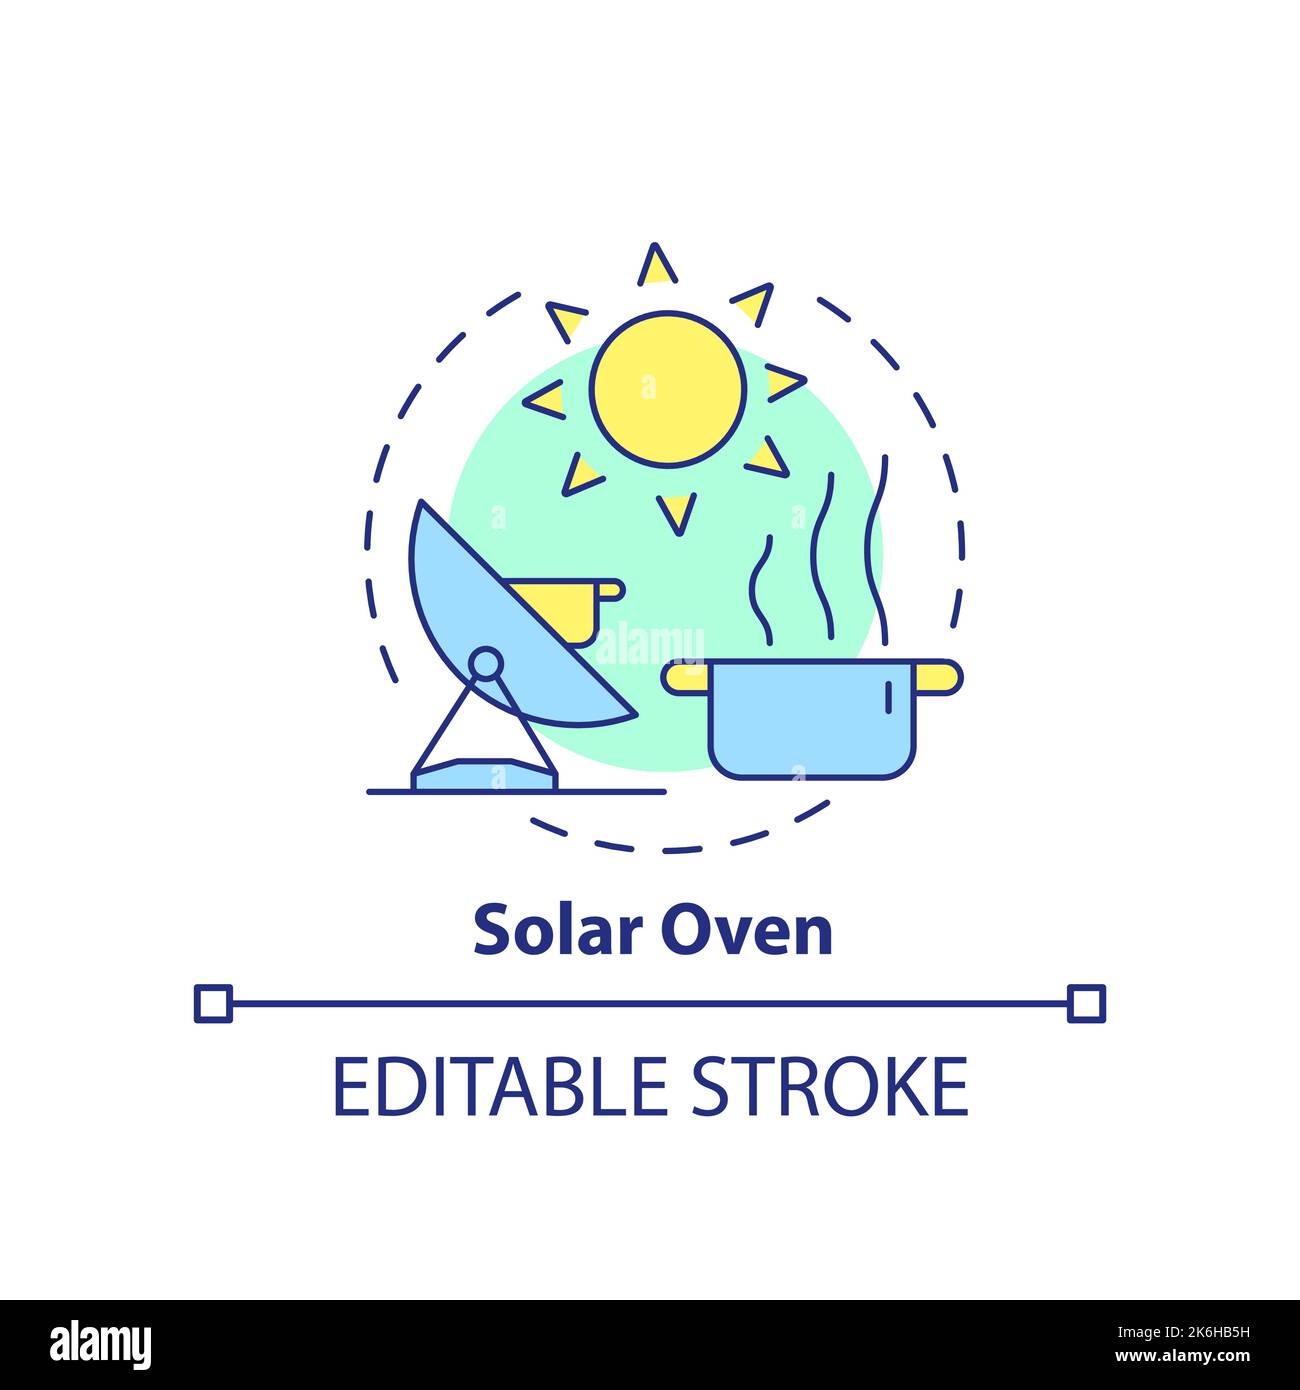 Solar oven concept icon Stock Vector